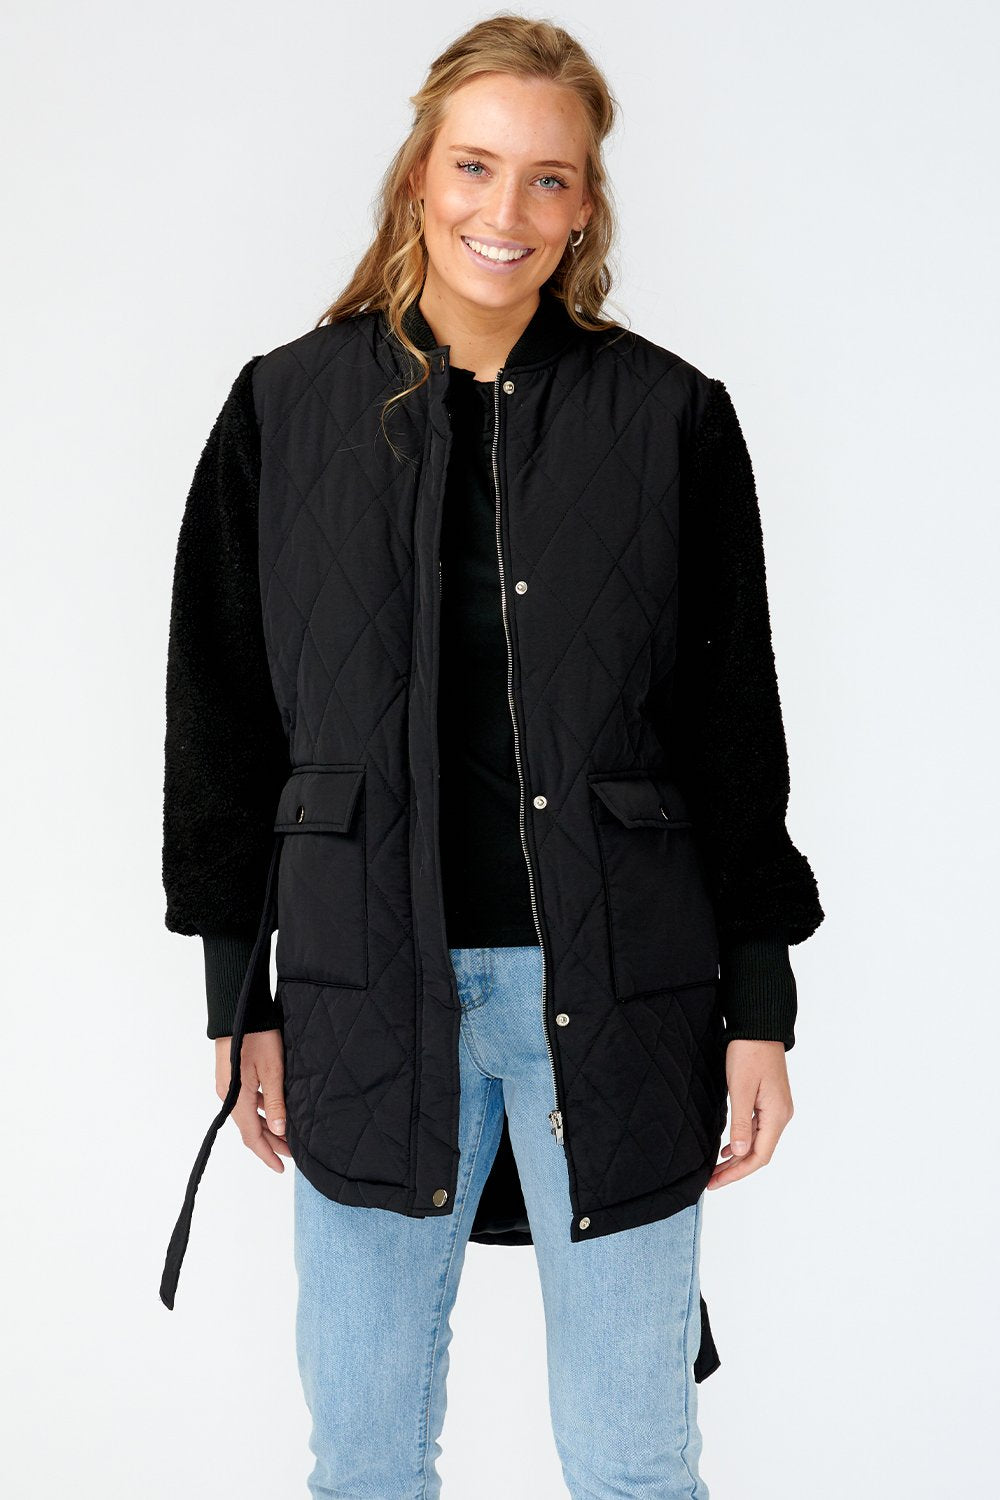 Esme Pile Jacket Solid Black